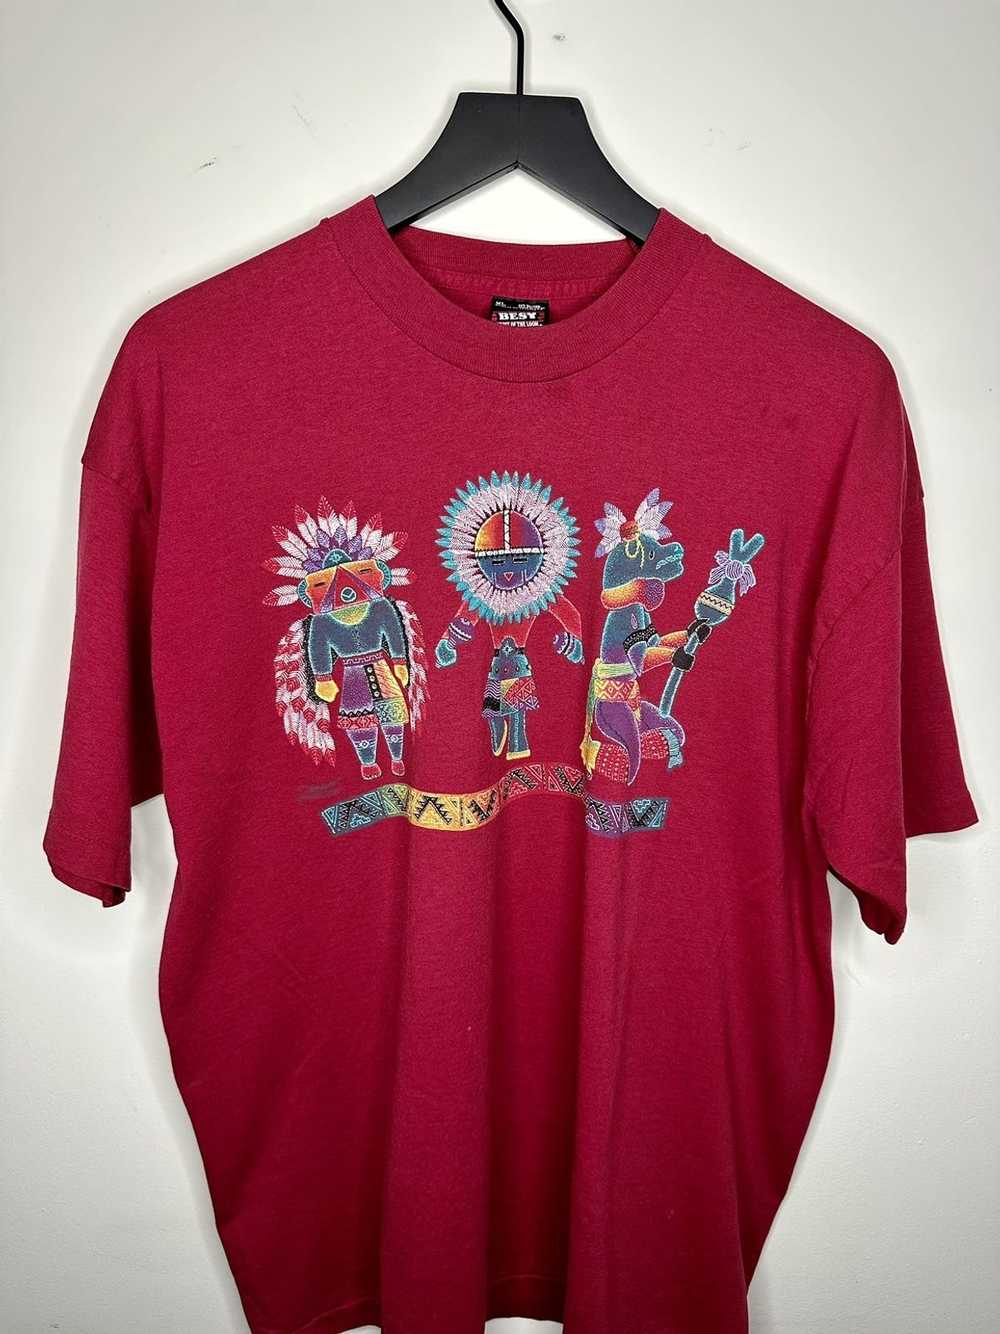 Other Vintage 1995 Tribal Arizona T-Shirt - image 1